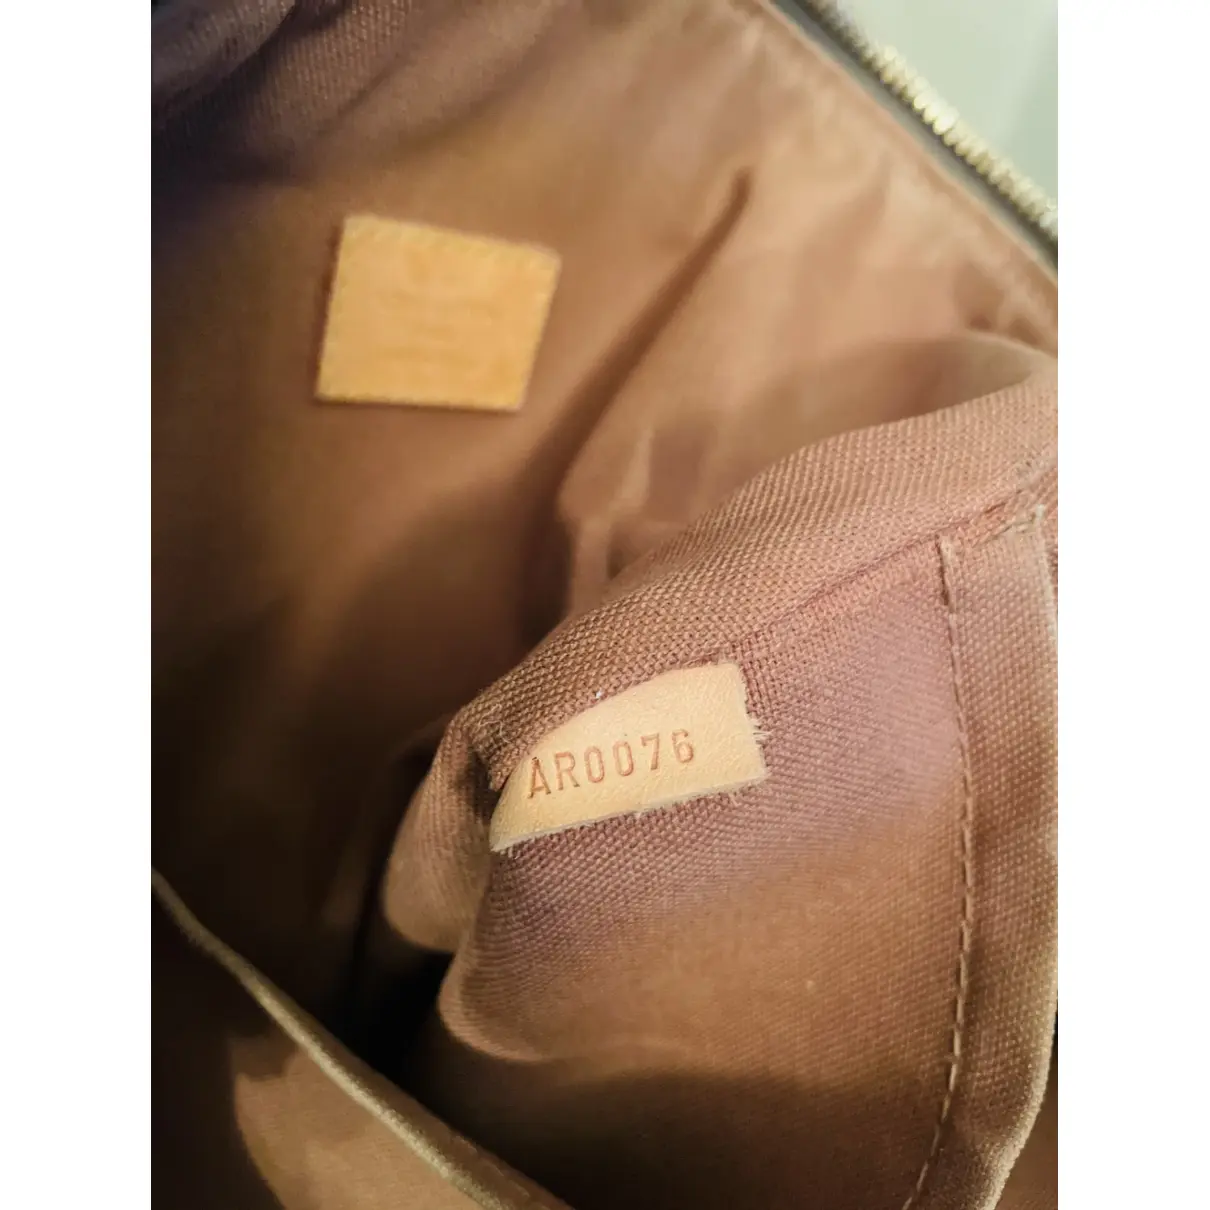 Lockit cloth handbag Louis Vuitton